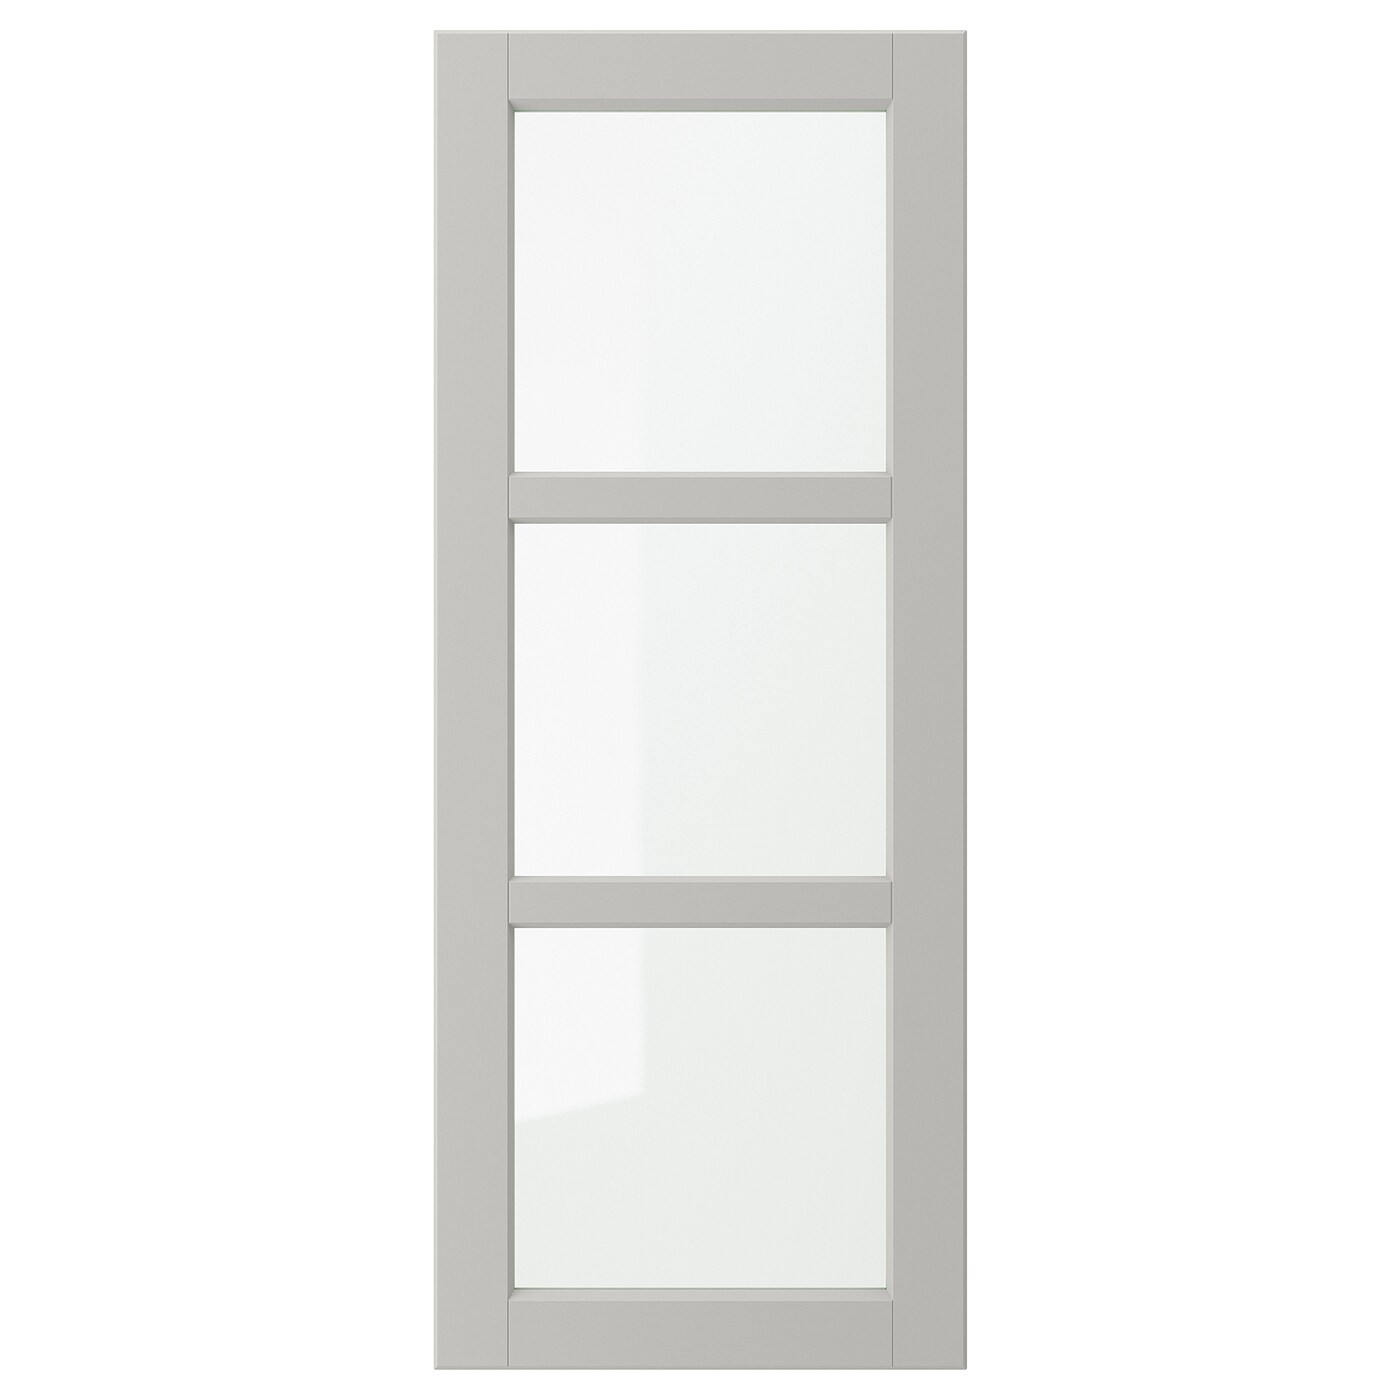 Дверца со стеклом - IKEA LERHYTTAN, 100х40 см, светло-серый, ЛЕРХЮТТАН ИКЕА